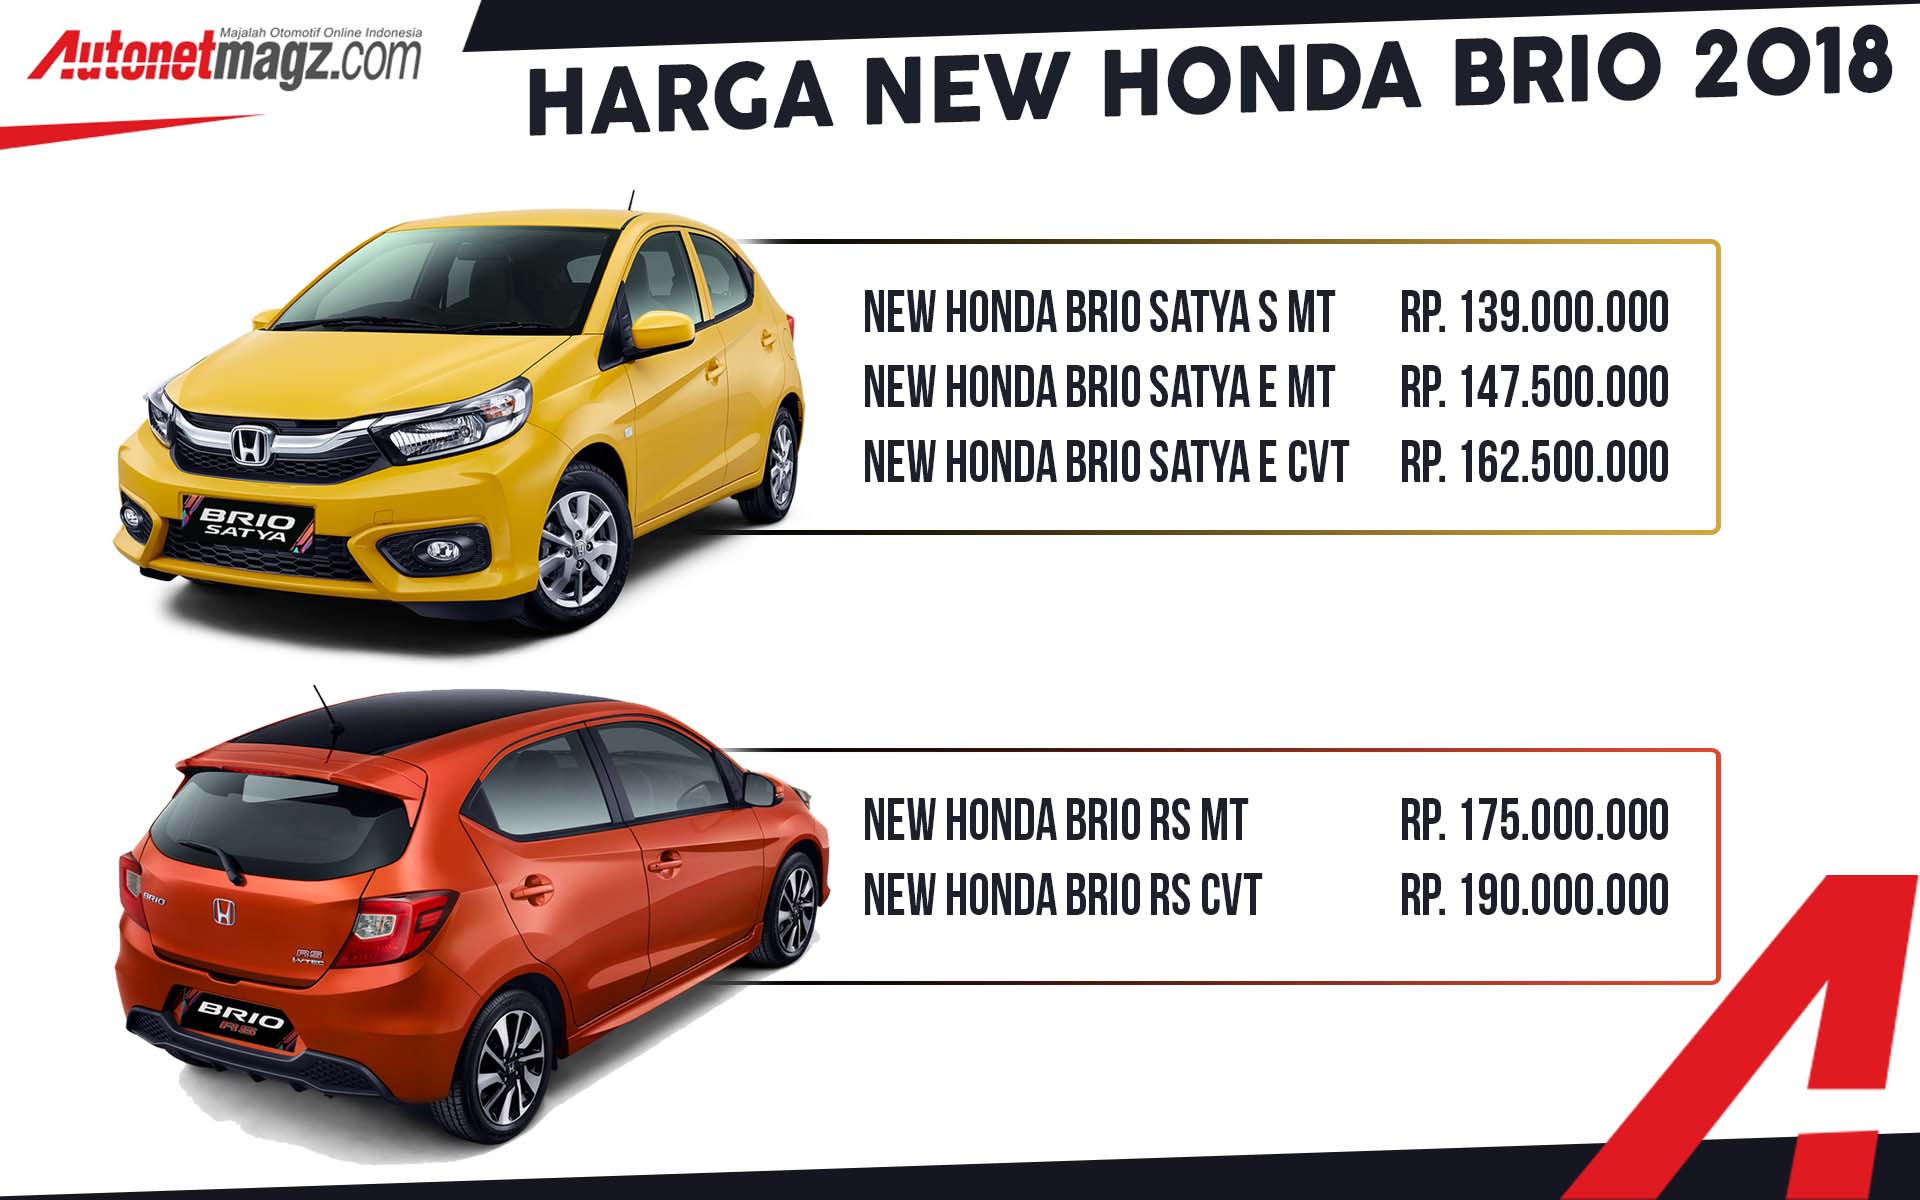 Berita, harga brio: Harga New Honda Brio Diumumkan Resmi, Mulai 139 Juta Rupiah